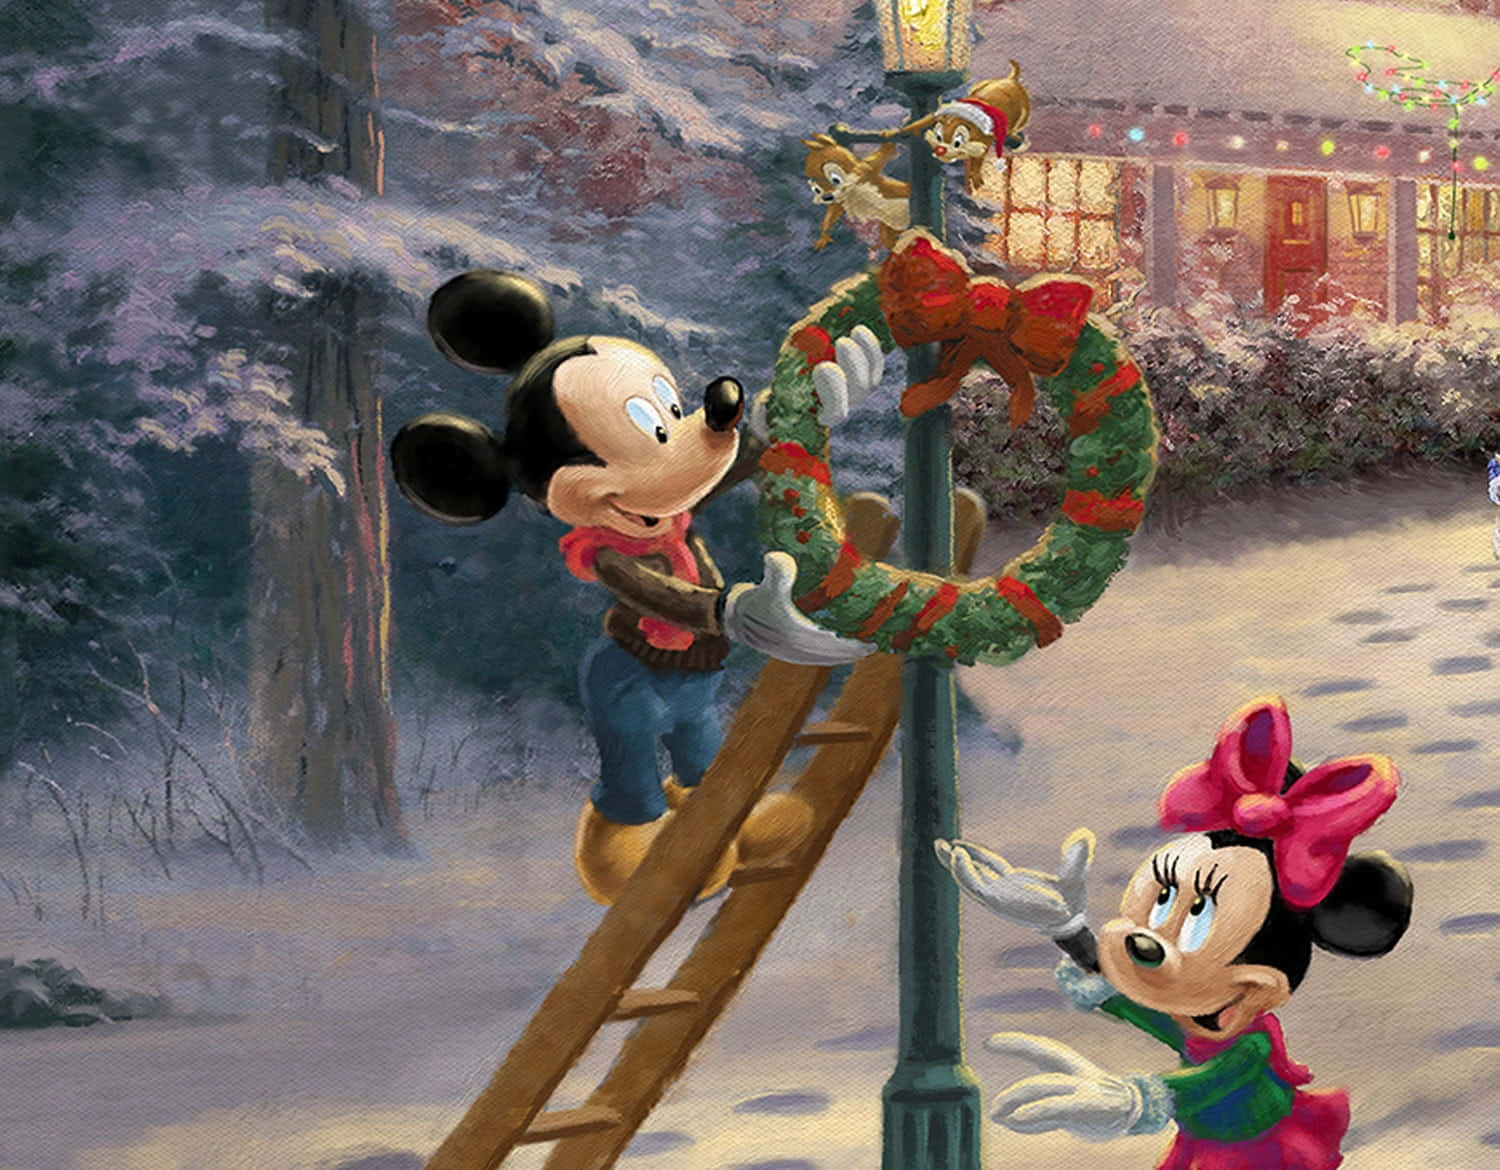 Mickeymouse Och Minnie Mouse Dekorerar En Julgran.